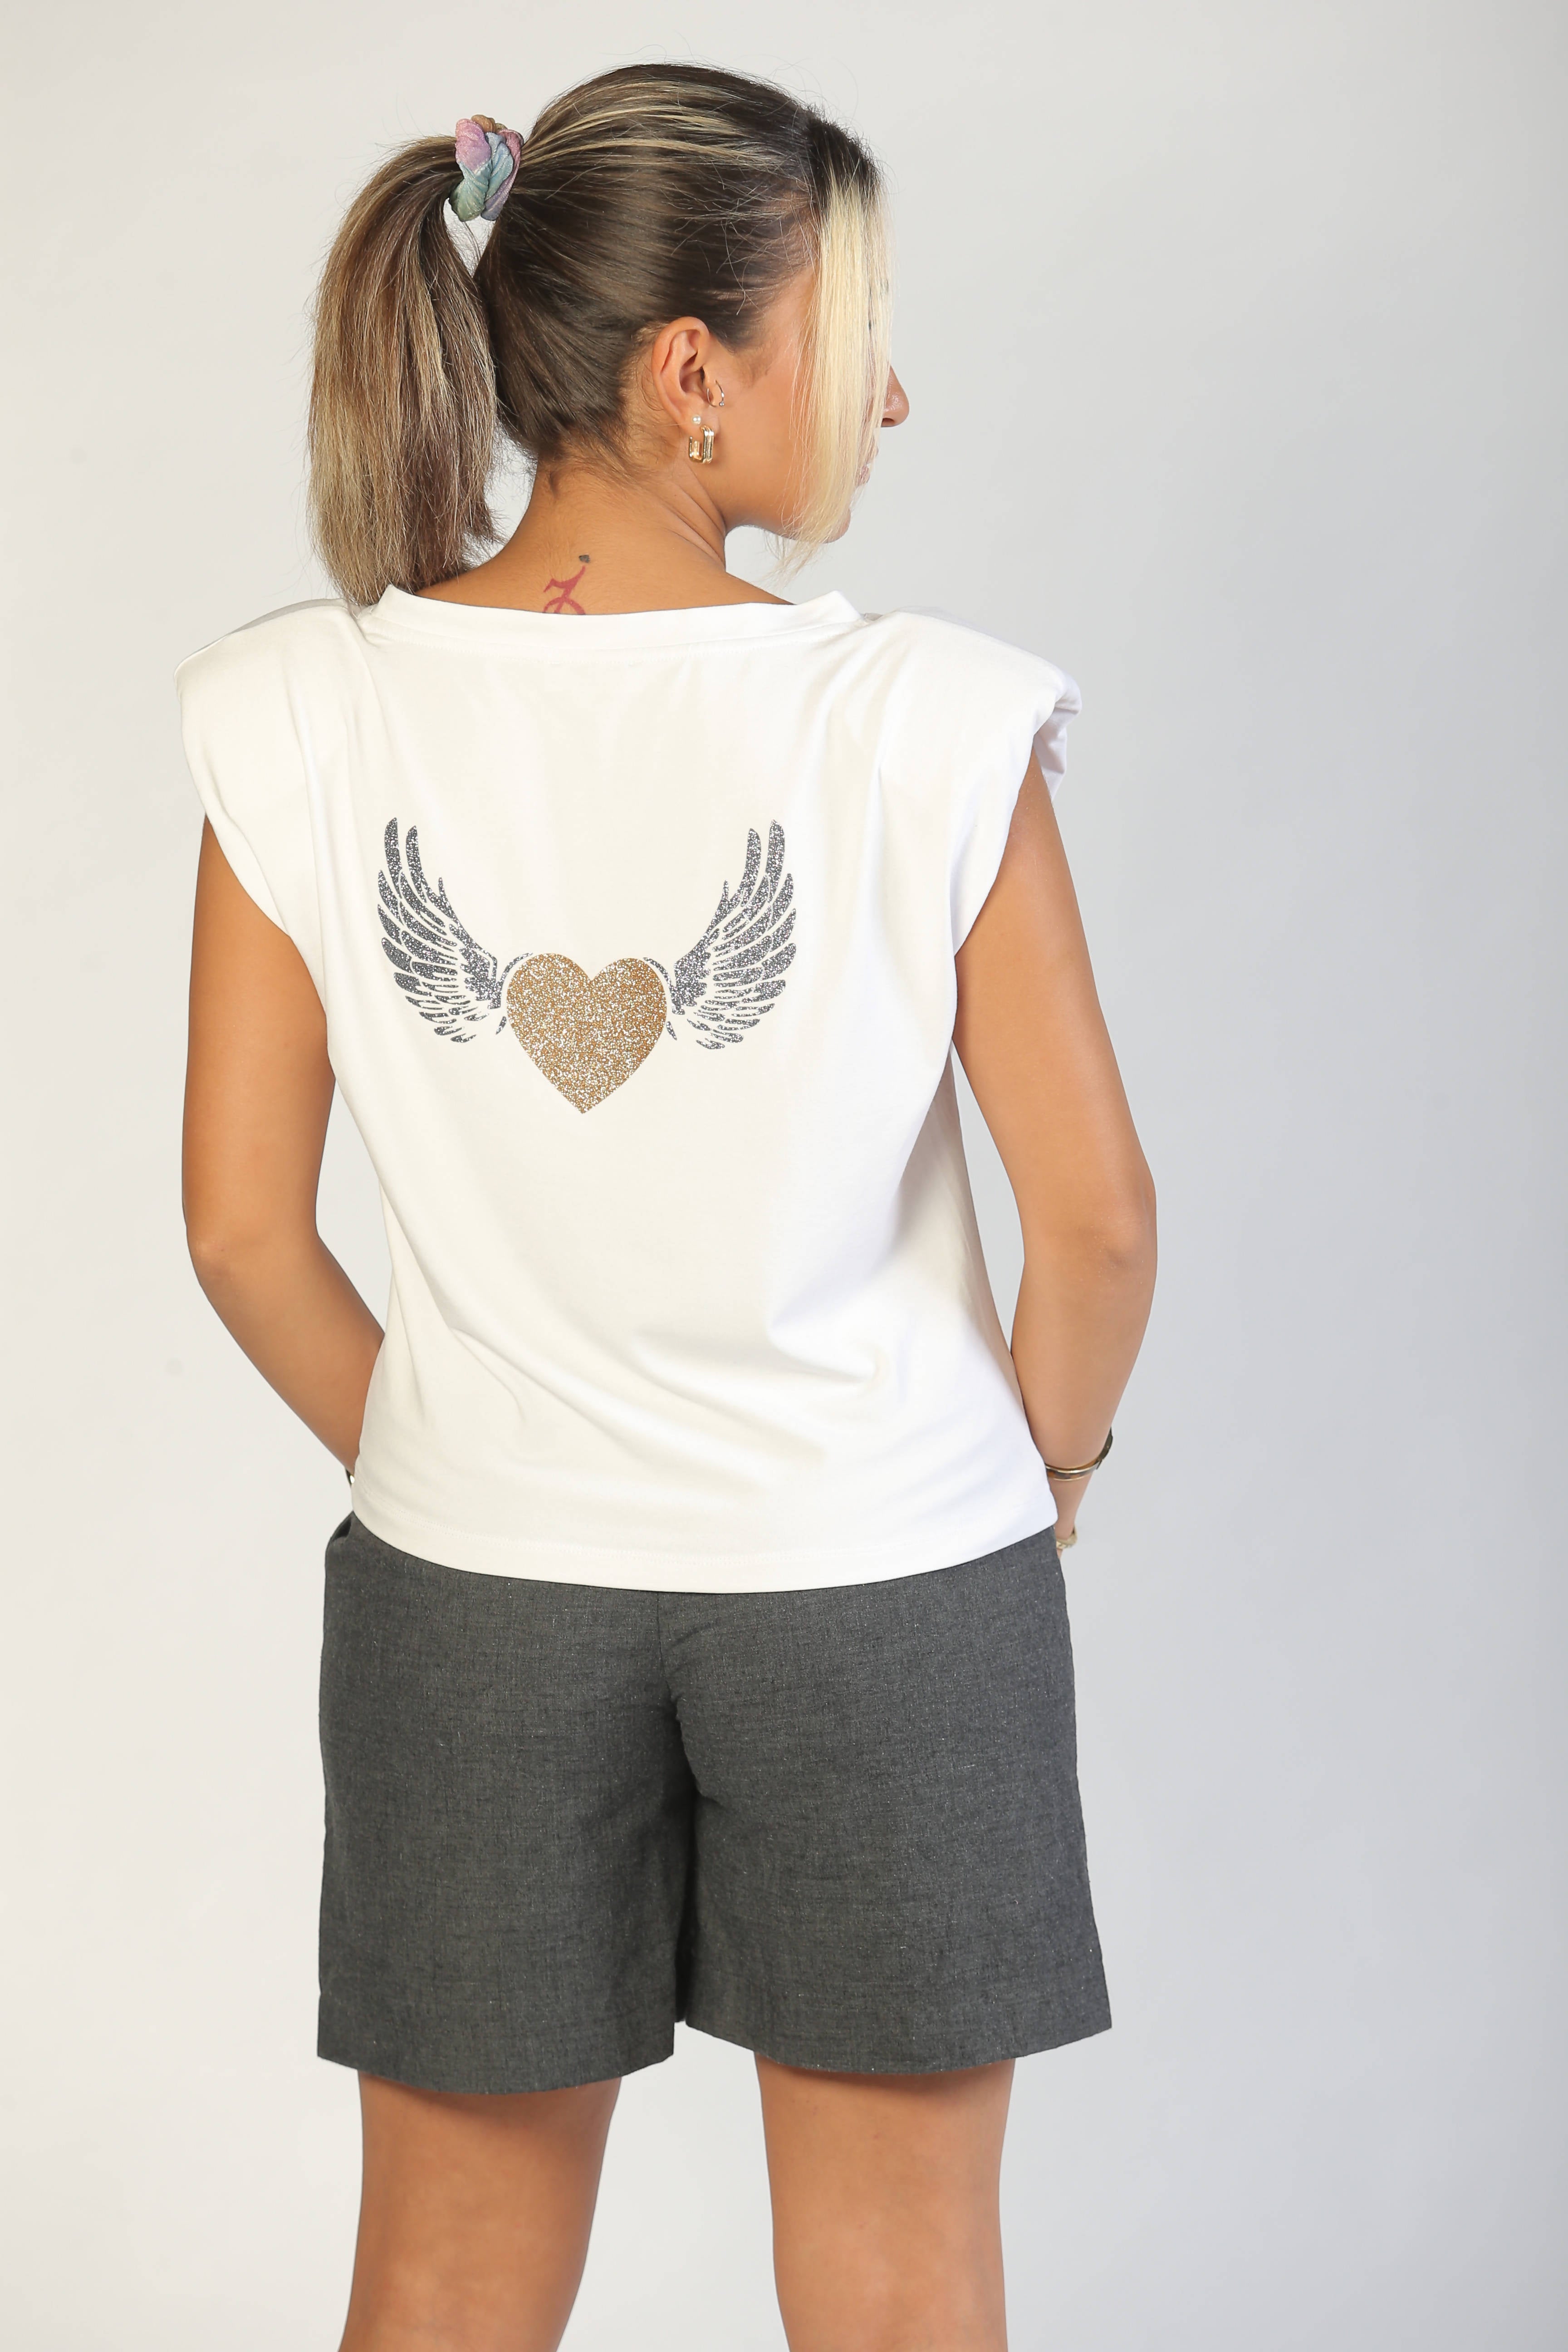 Winged Heart T-shirt